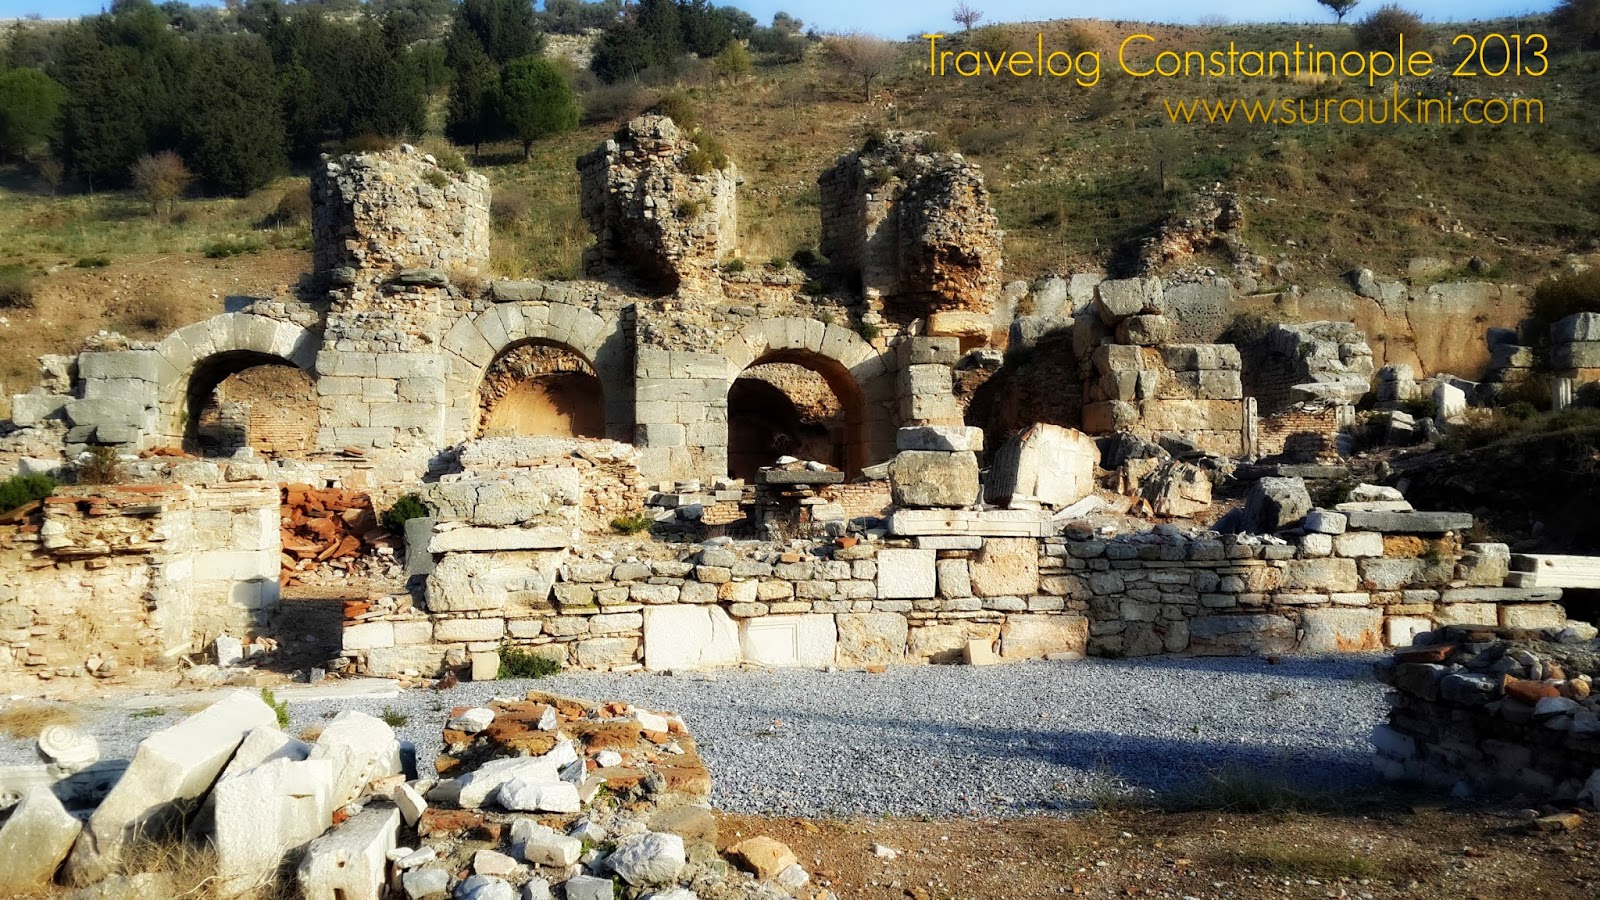 Gambar sekitar Kota Purba Ephesus Turkey ~ S U R A U K I N I